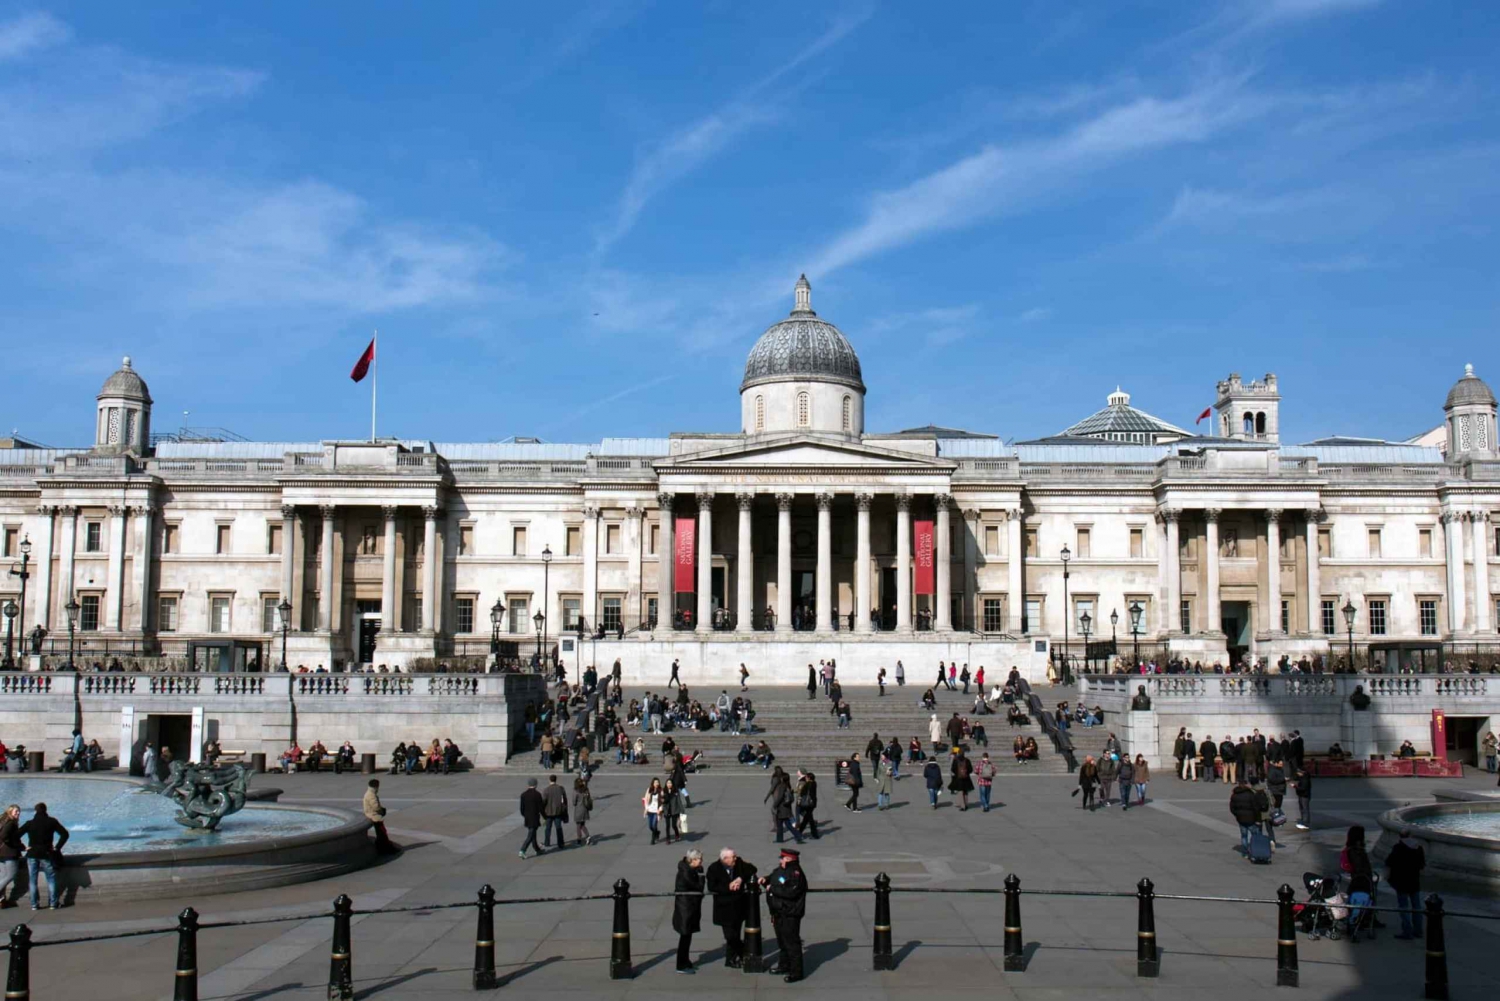 Londres: Murder Mystery Tour by Trafalgar Square (inglés)